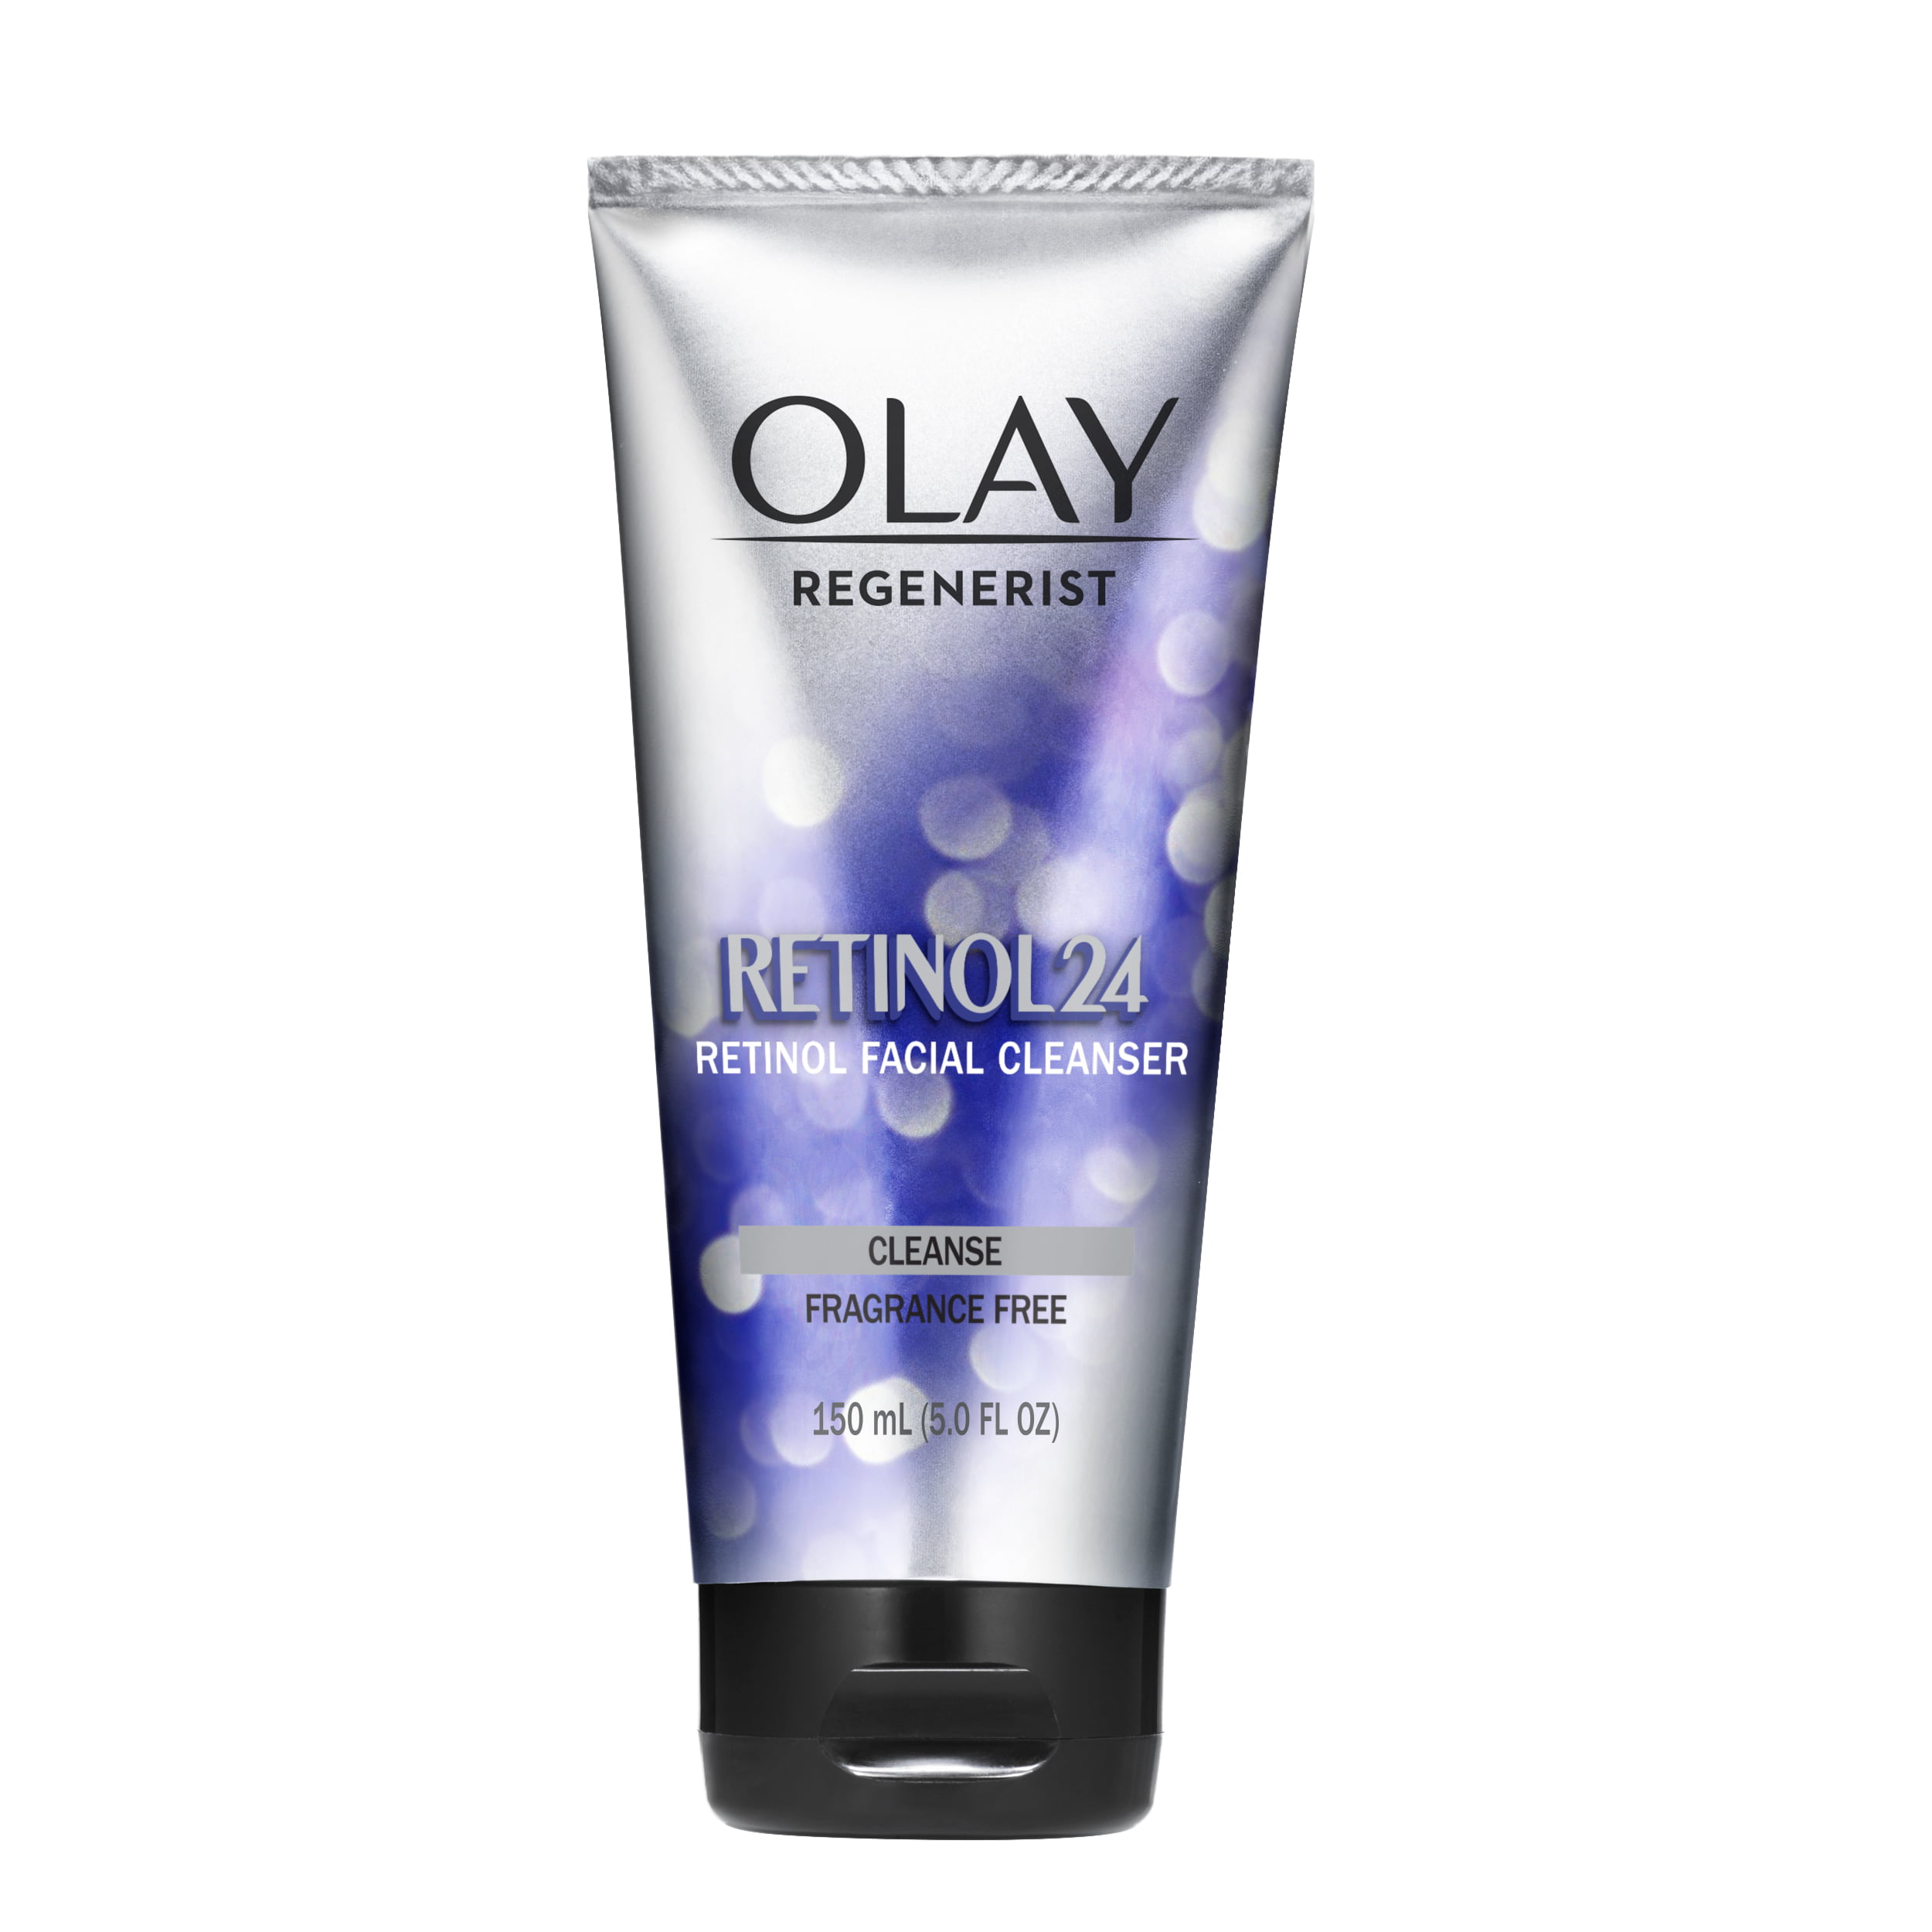 Olay Regenerist Retinol 24 Face Cleanser, 5.0 oz